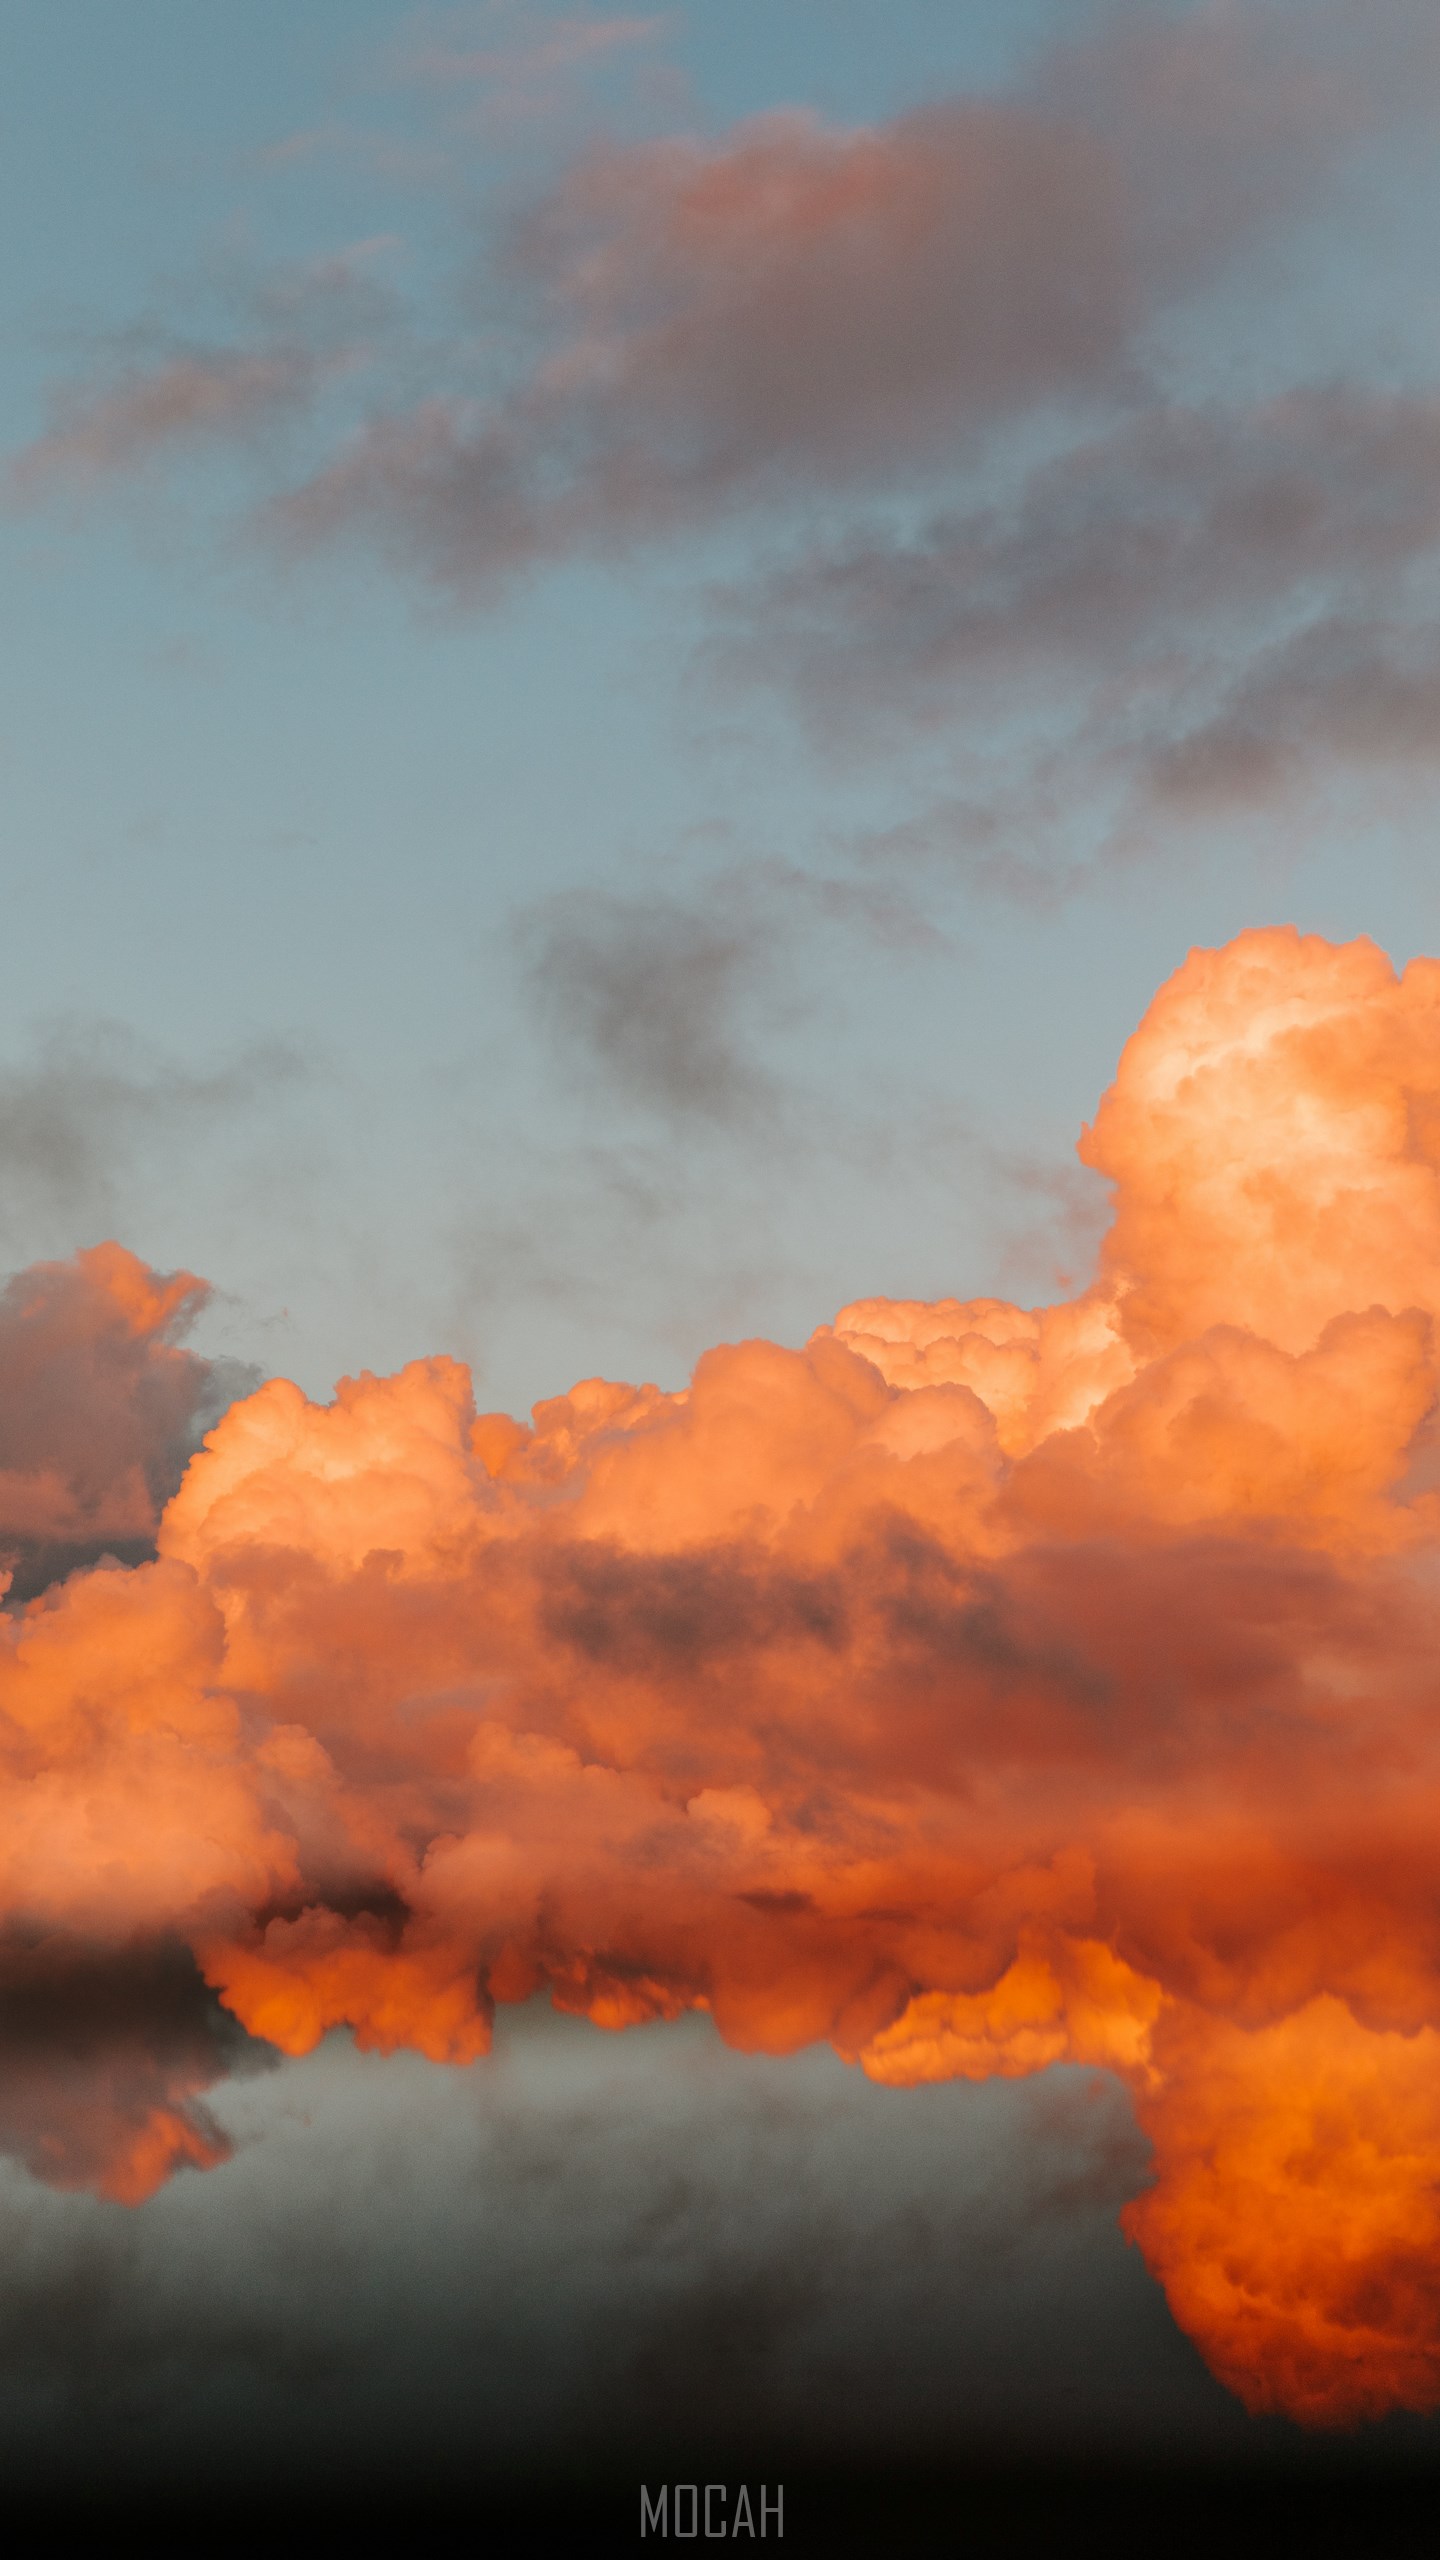 A plane flying over the clouds at sunset - Cloud, sky, orange, pastel orange